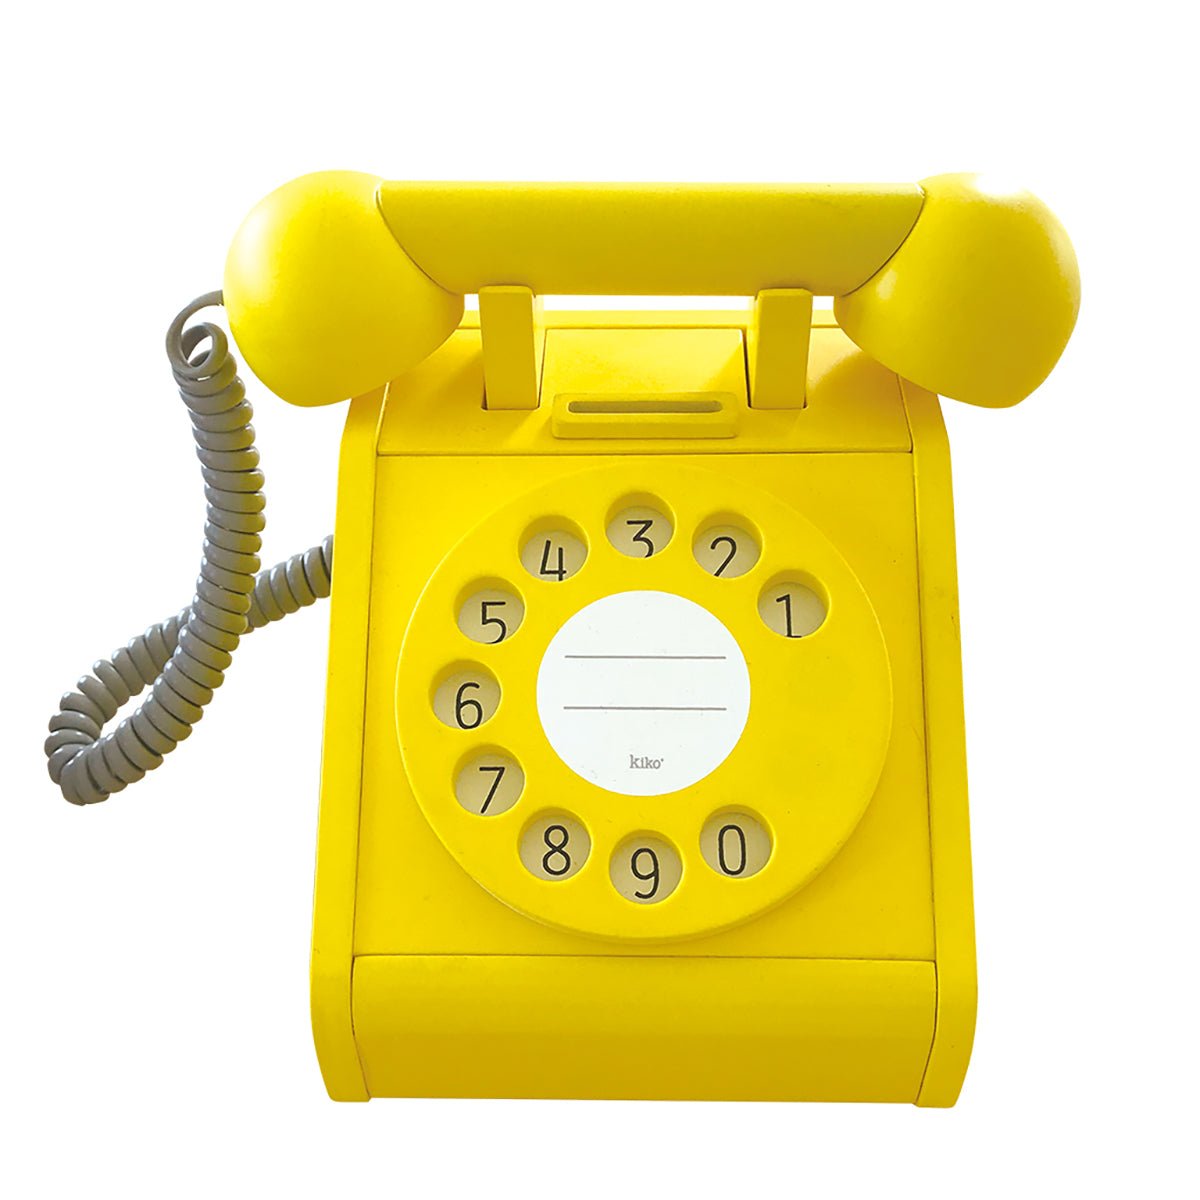 Kiko Telephone Yellow | Kiko GG